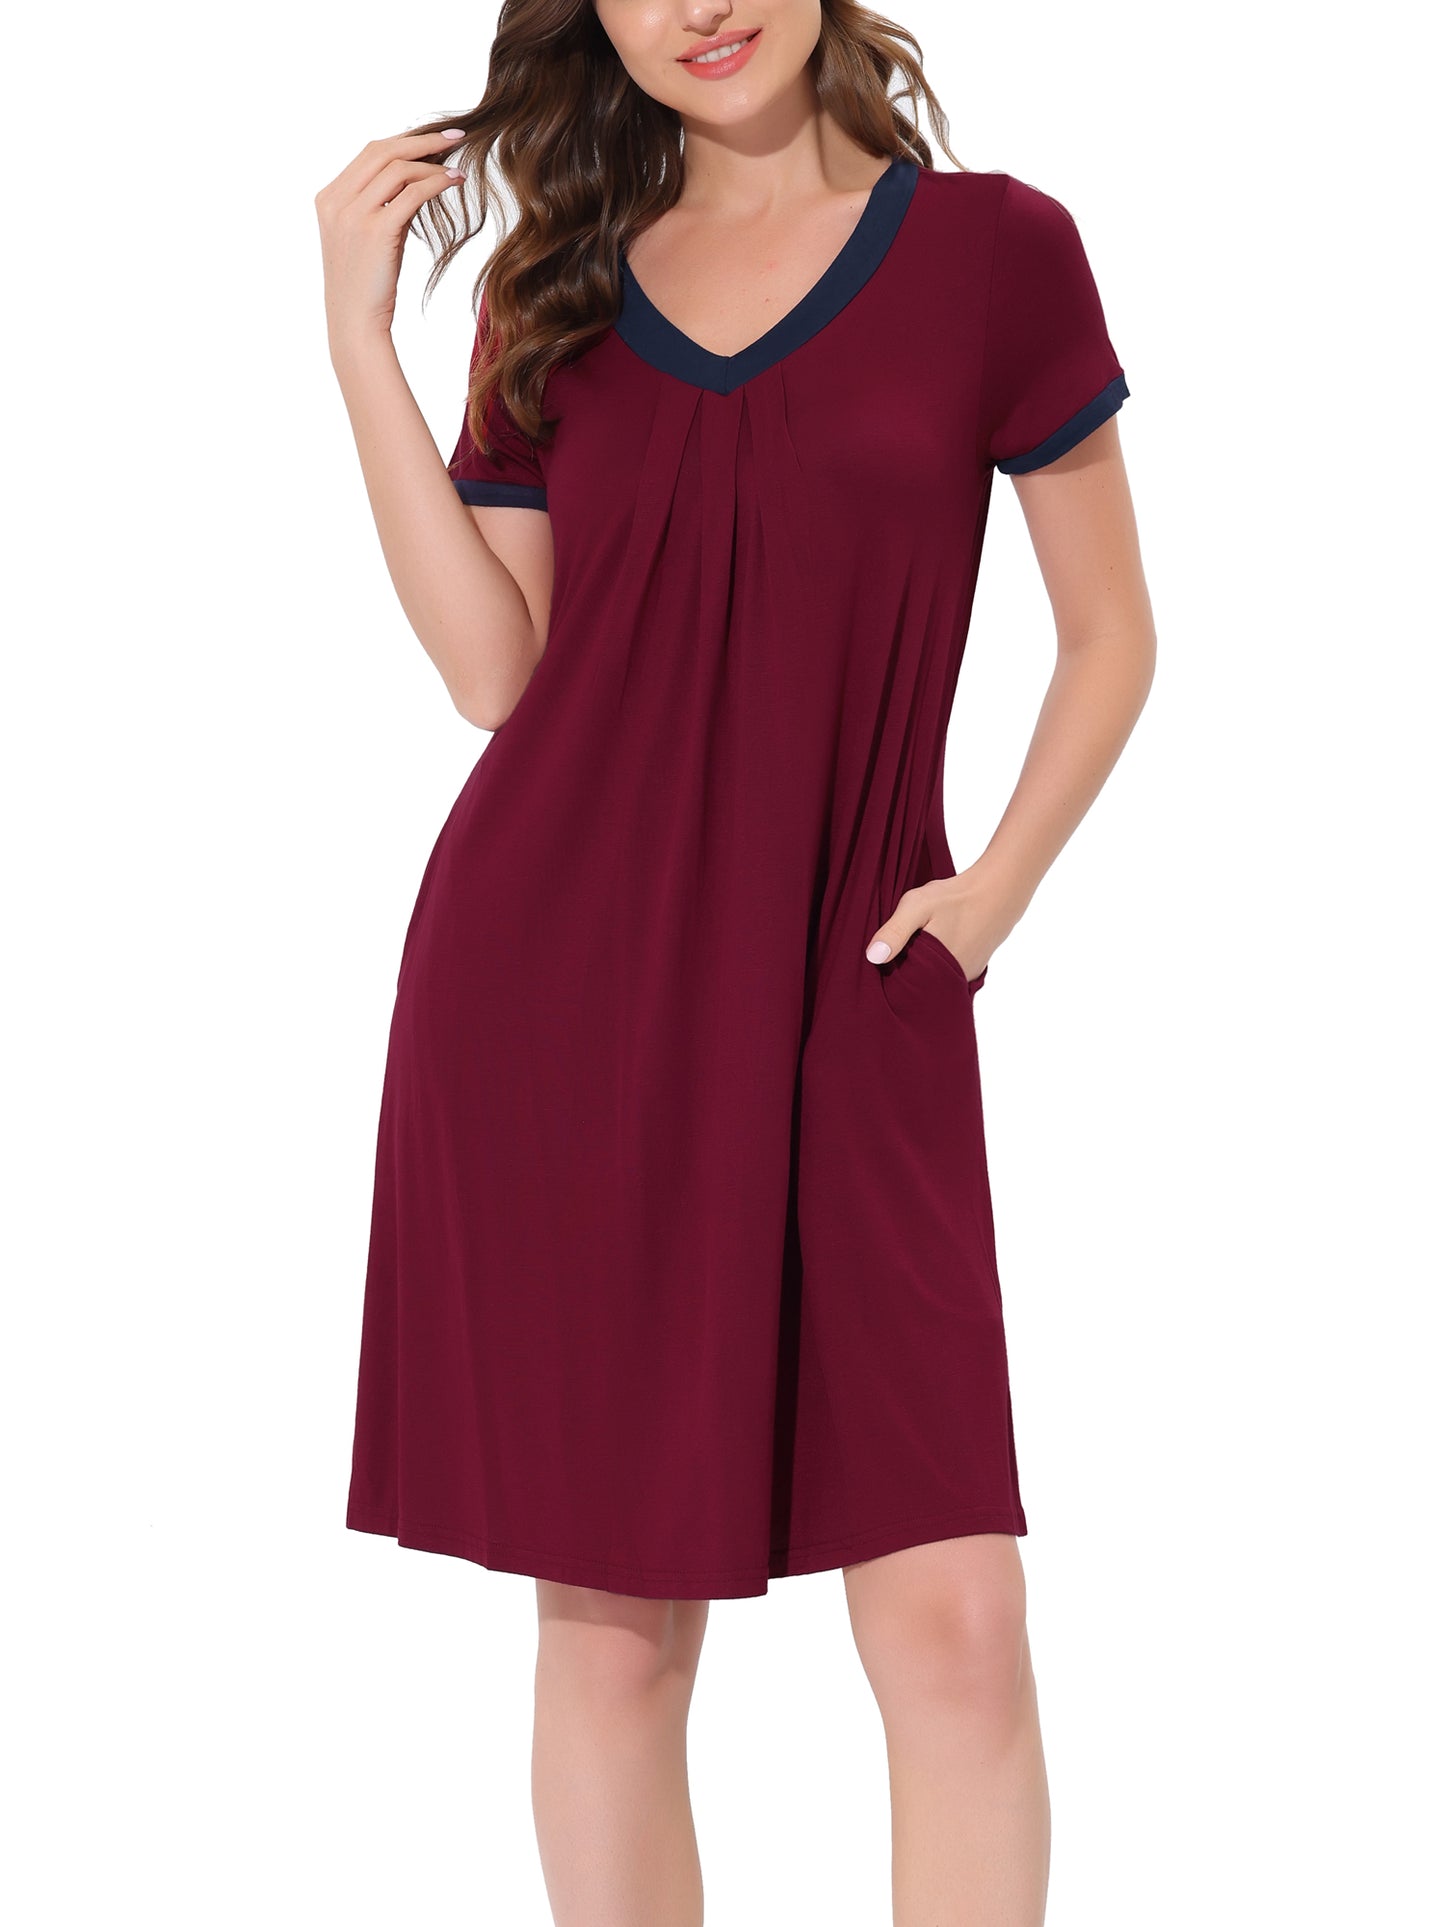 cheibear Pajama Dress Nightshirt Sleepwear V-Neck with Pockets Lounge Nightgown Red